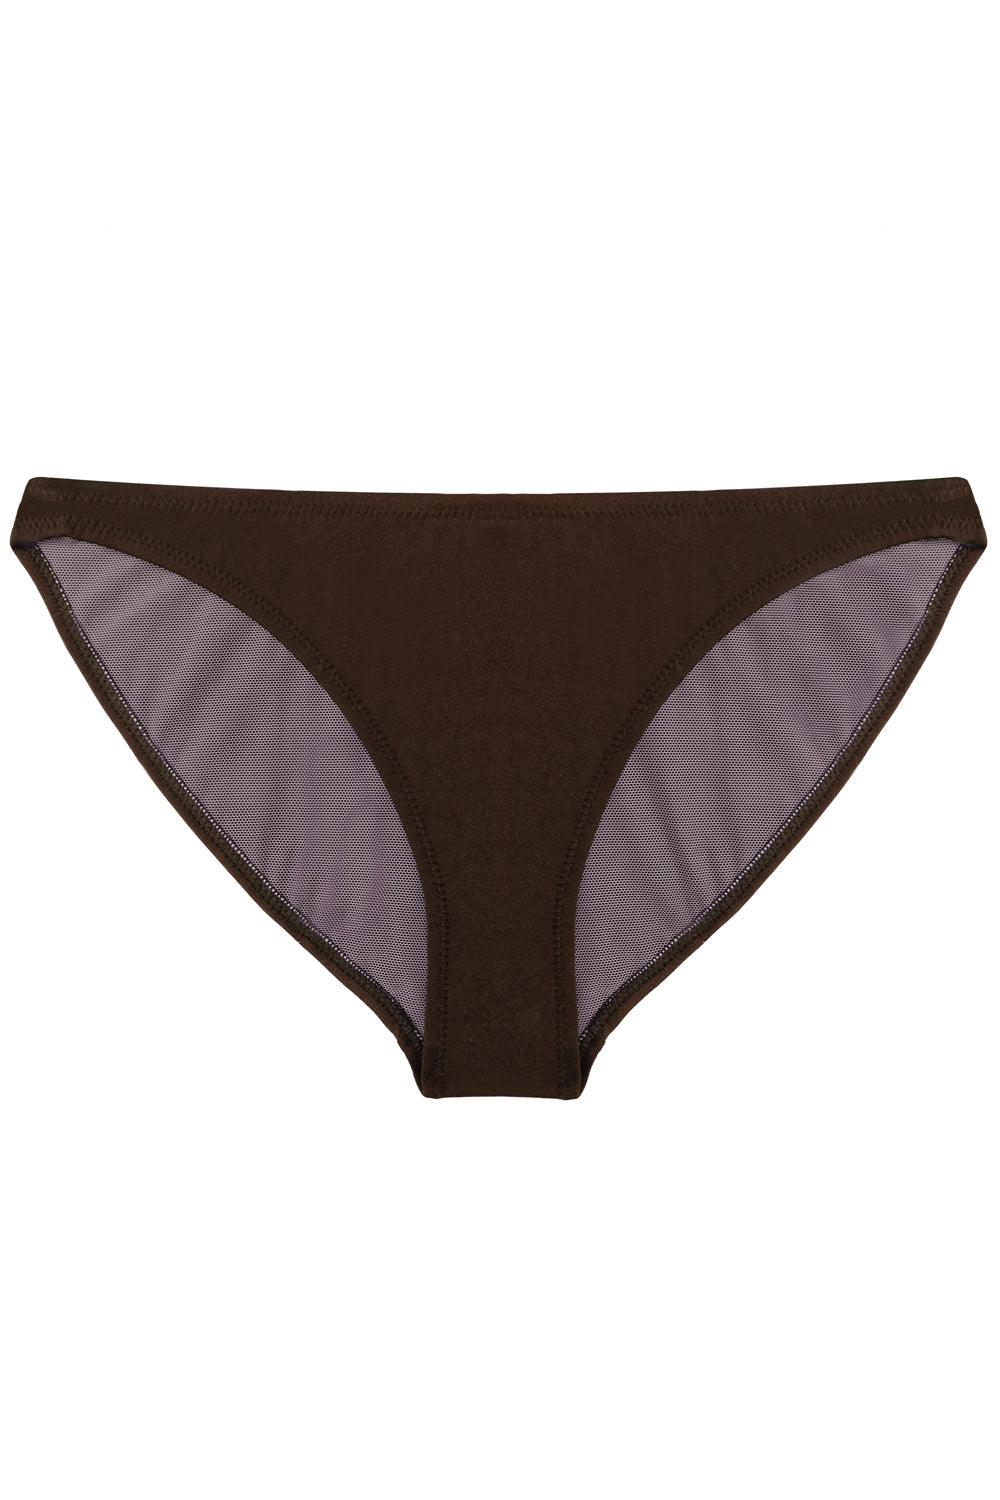 Tonic Chocolate bikini bottom - yesUndress